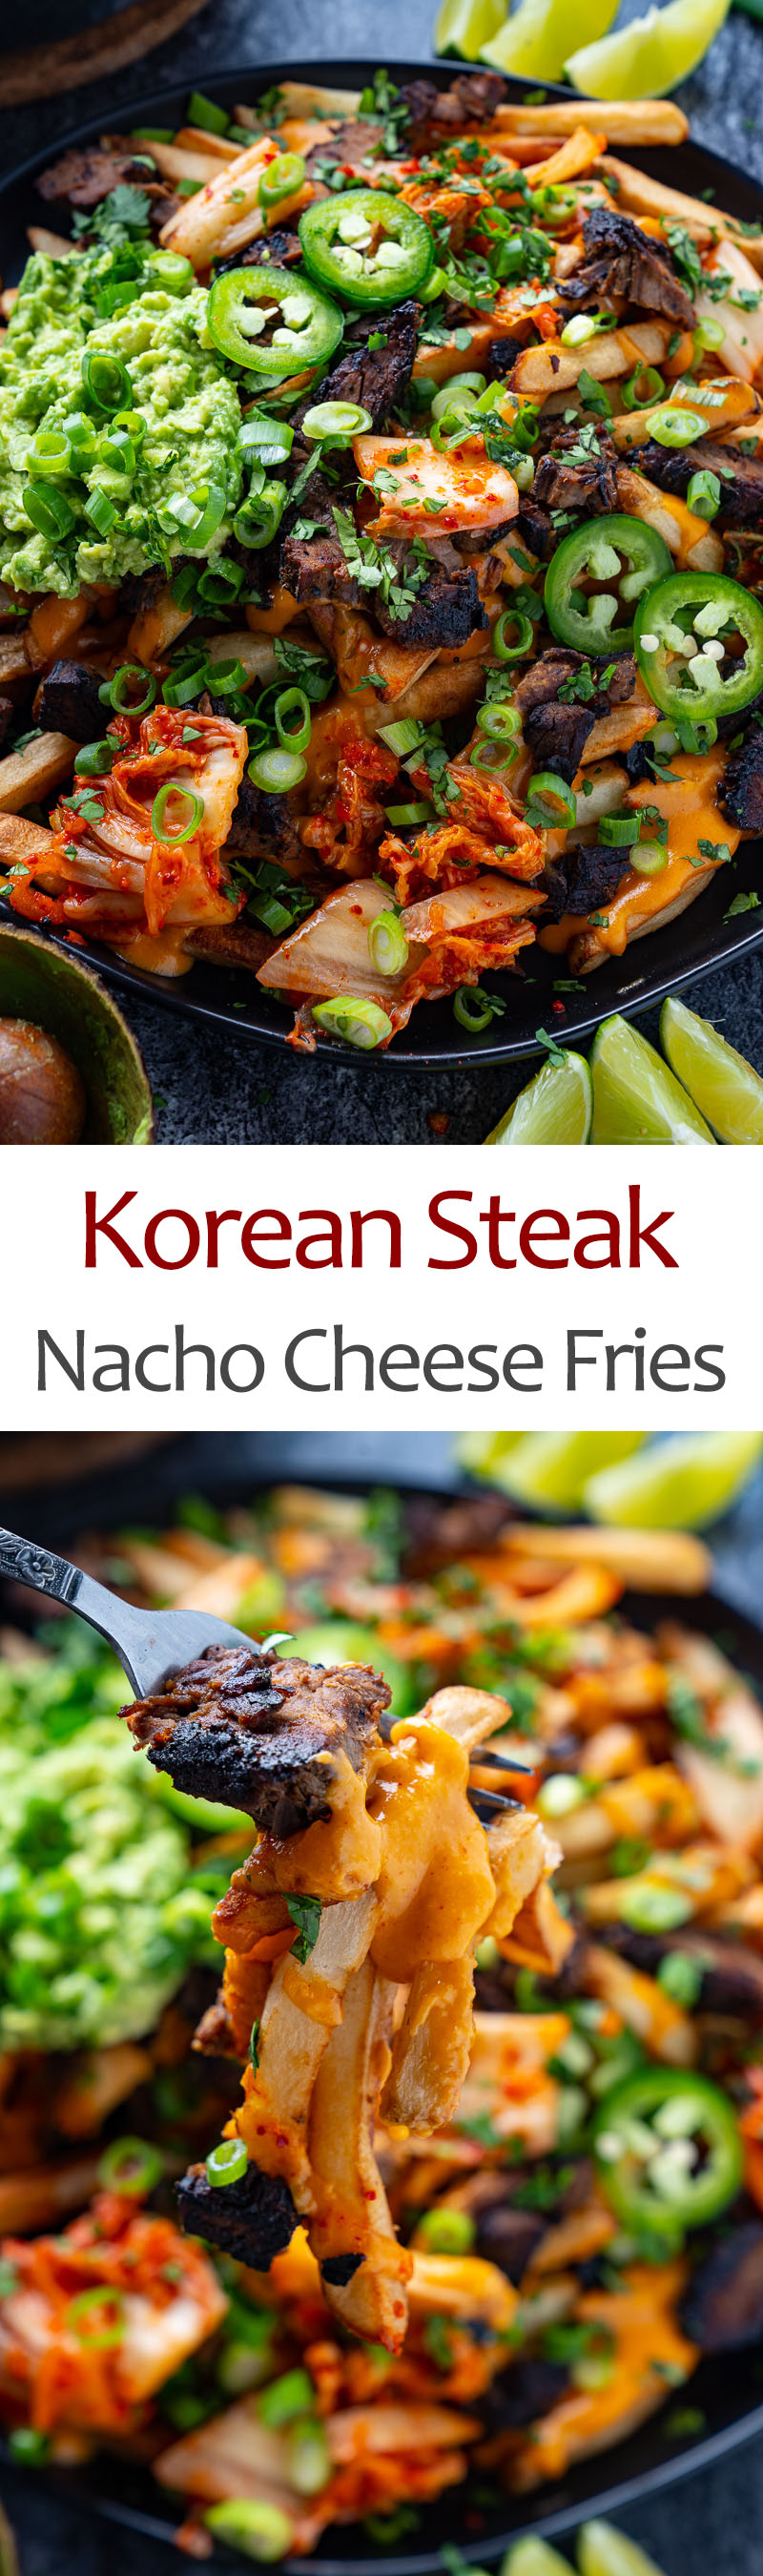 Korean Steak Nacho Cheese Fries